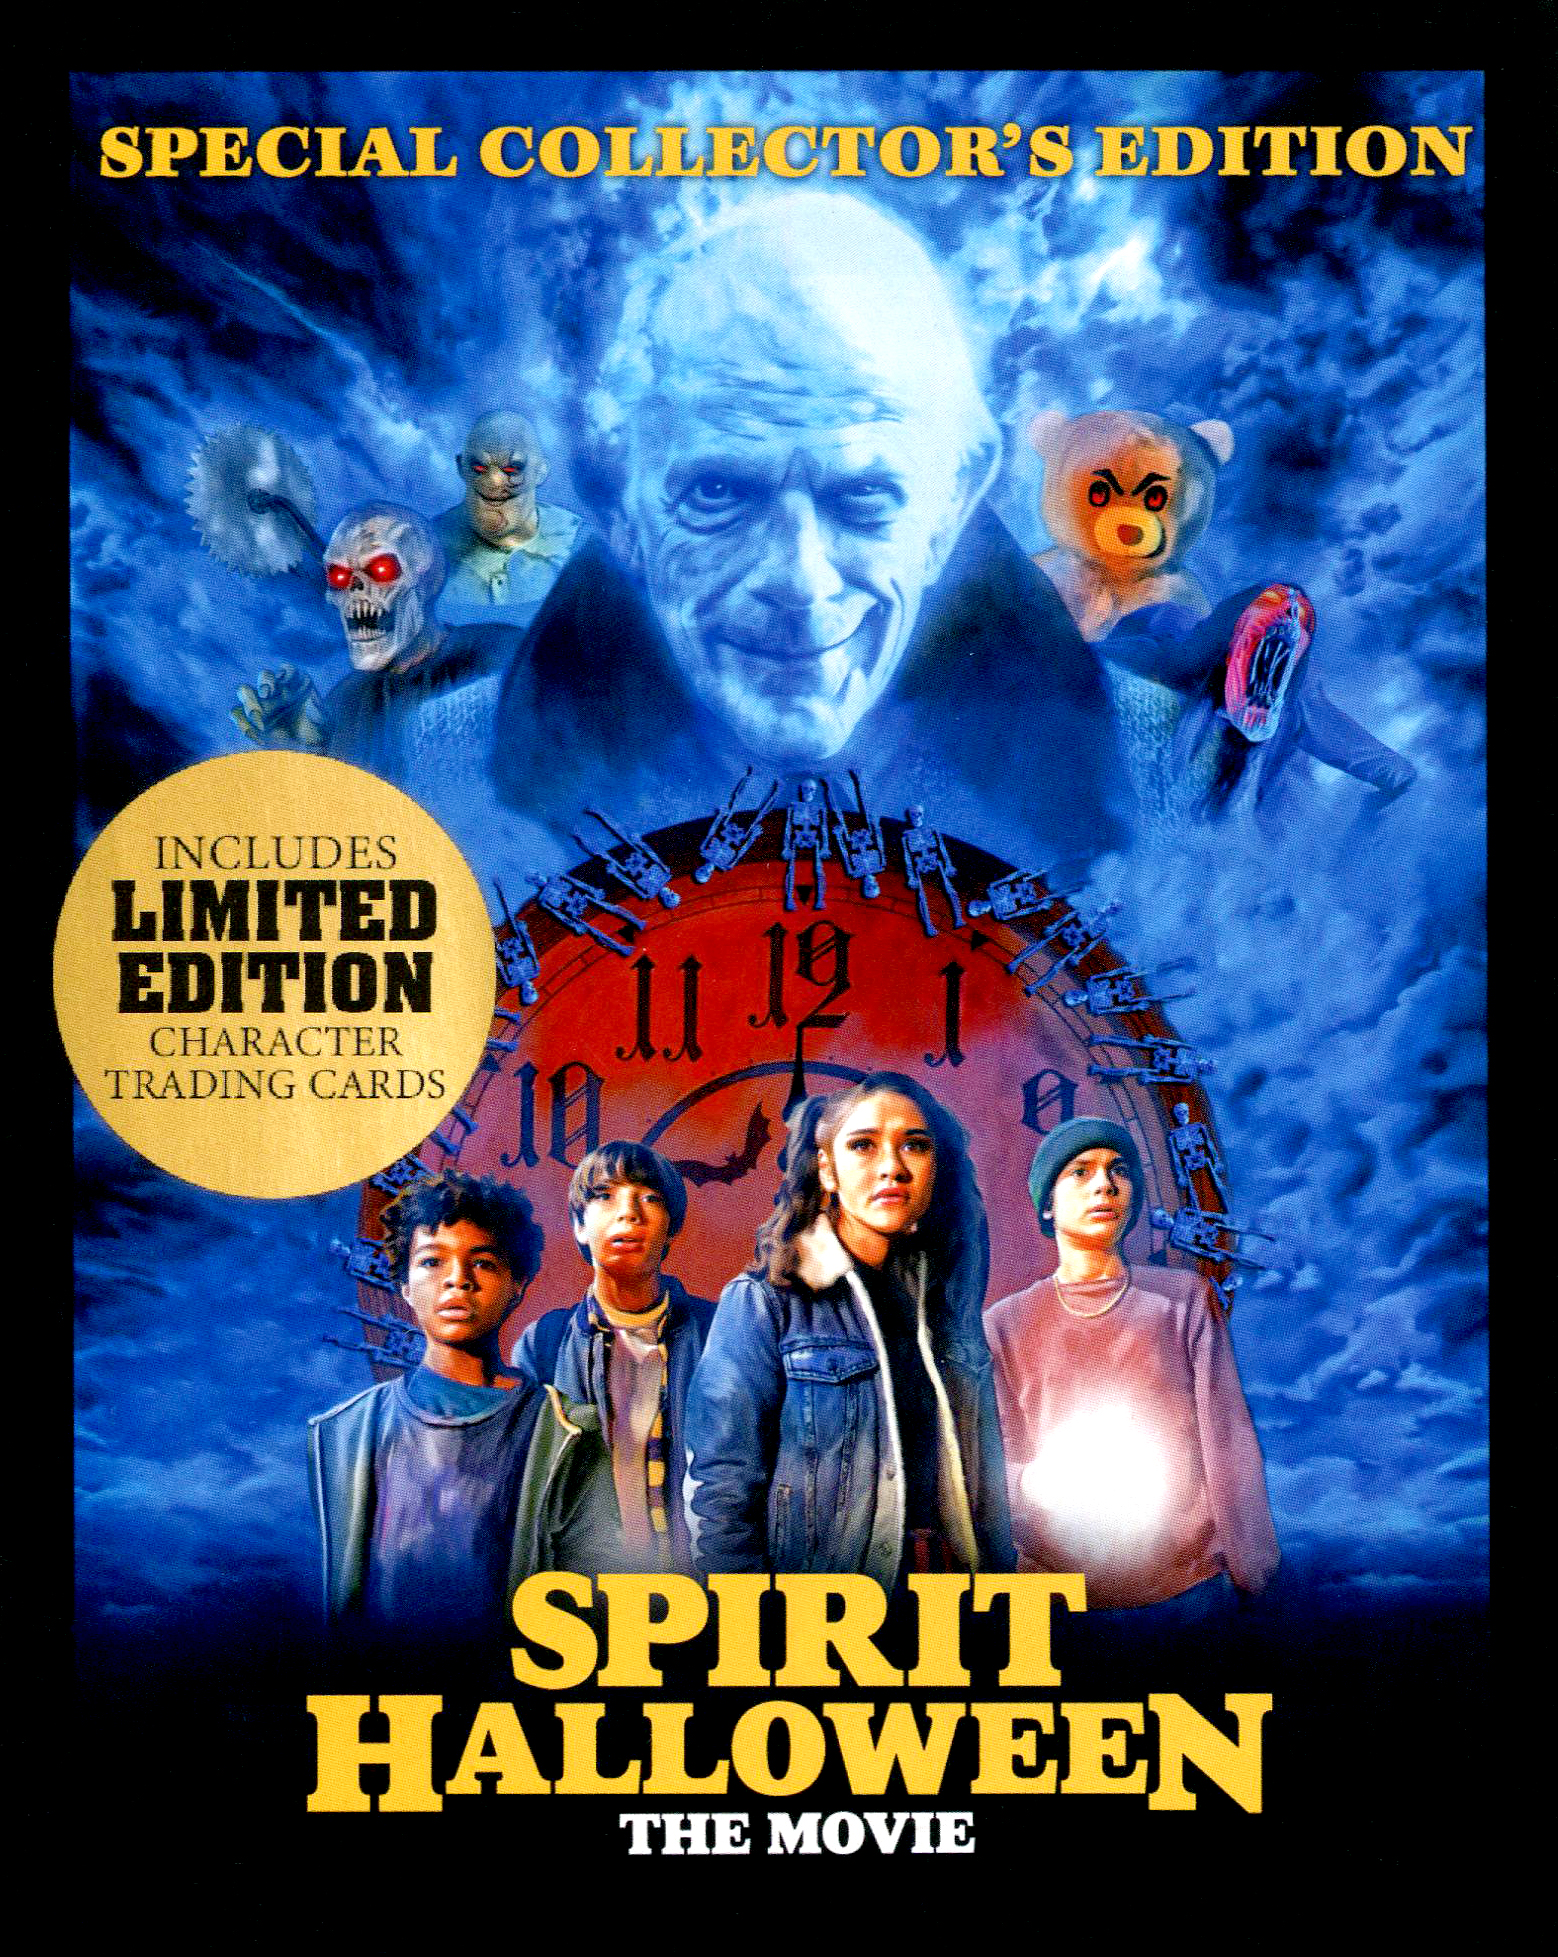 Watch Spirit Box: The Movie (2022) - Free Movies